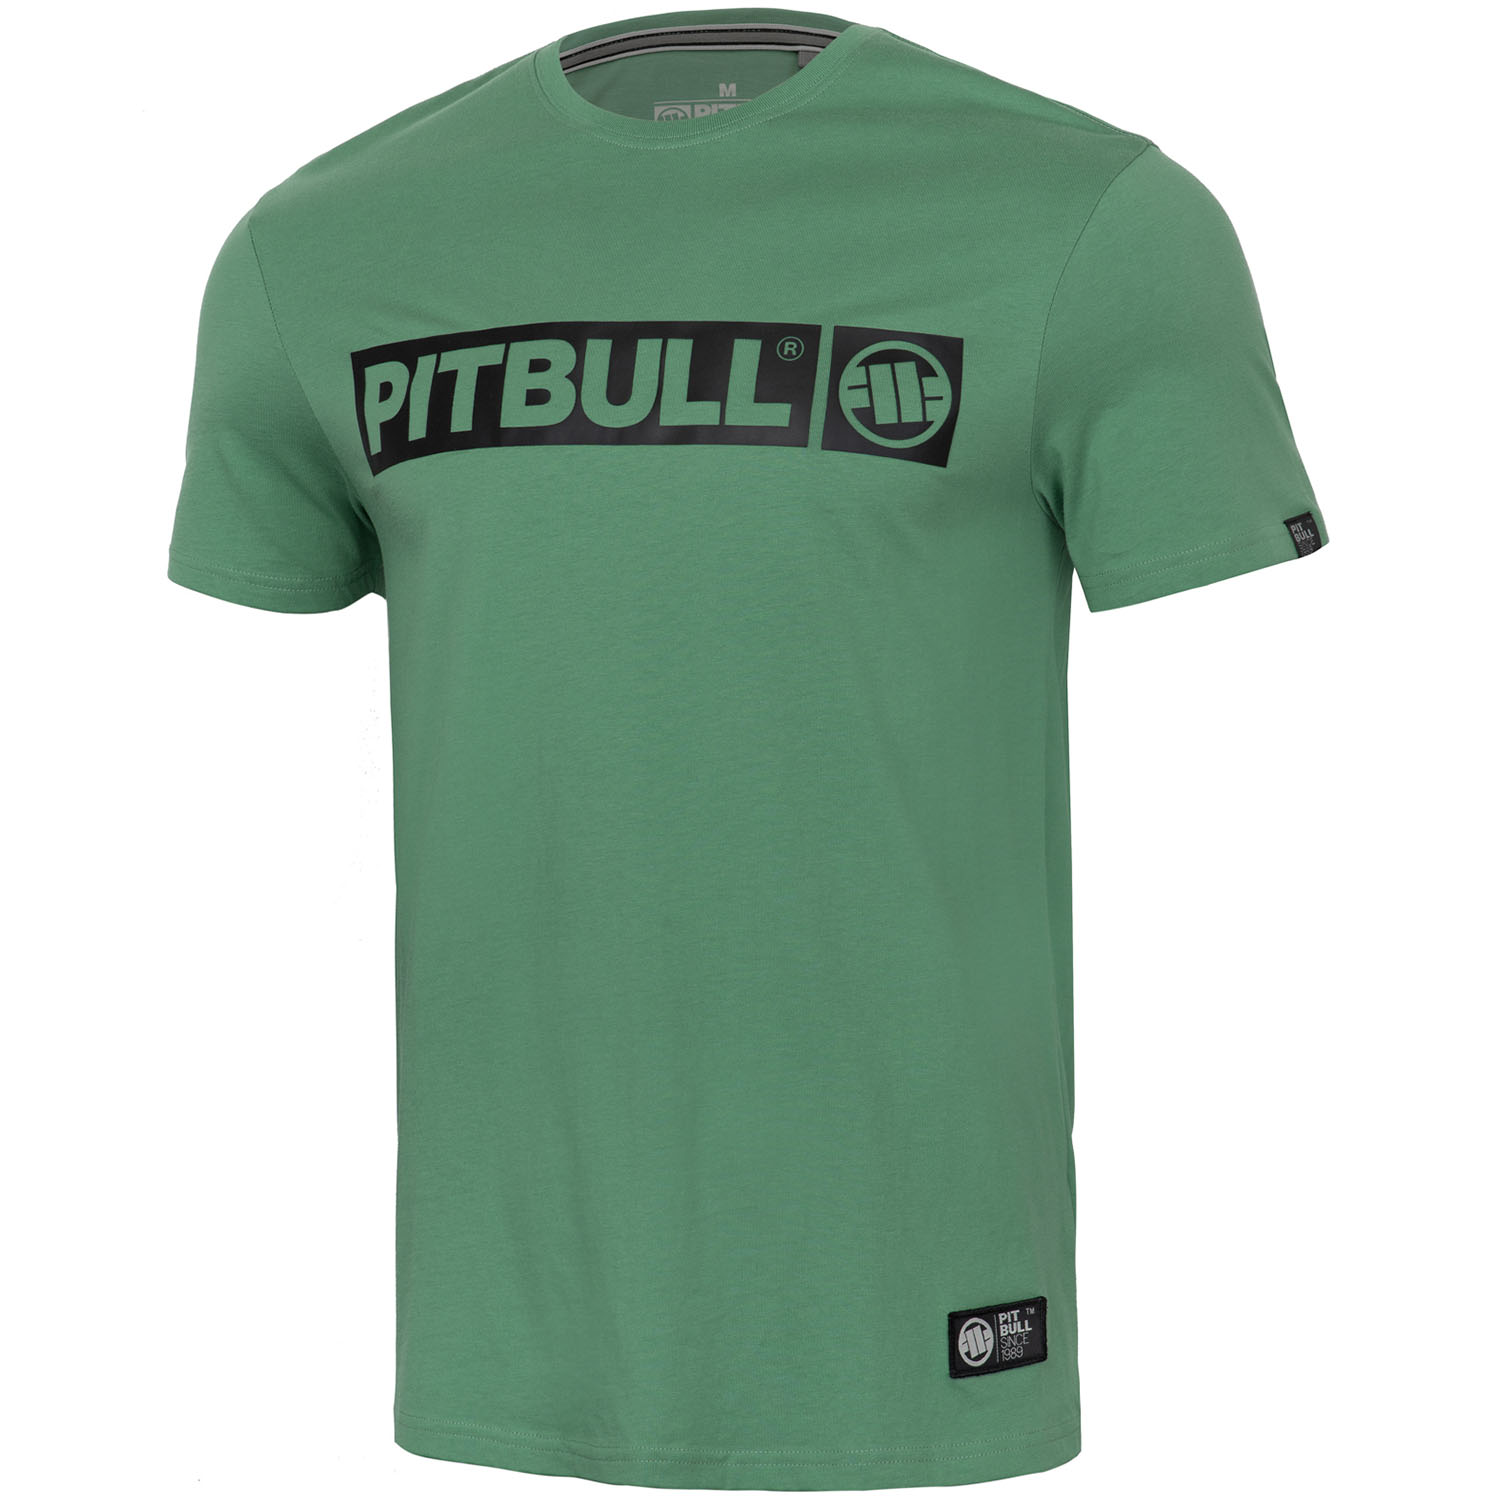 Pit Bull West Coast T-Shirt, Hilltop S70, green